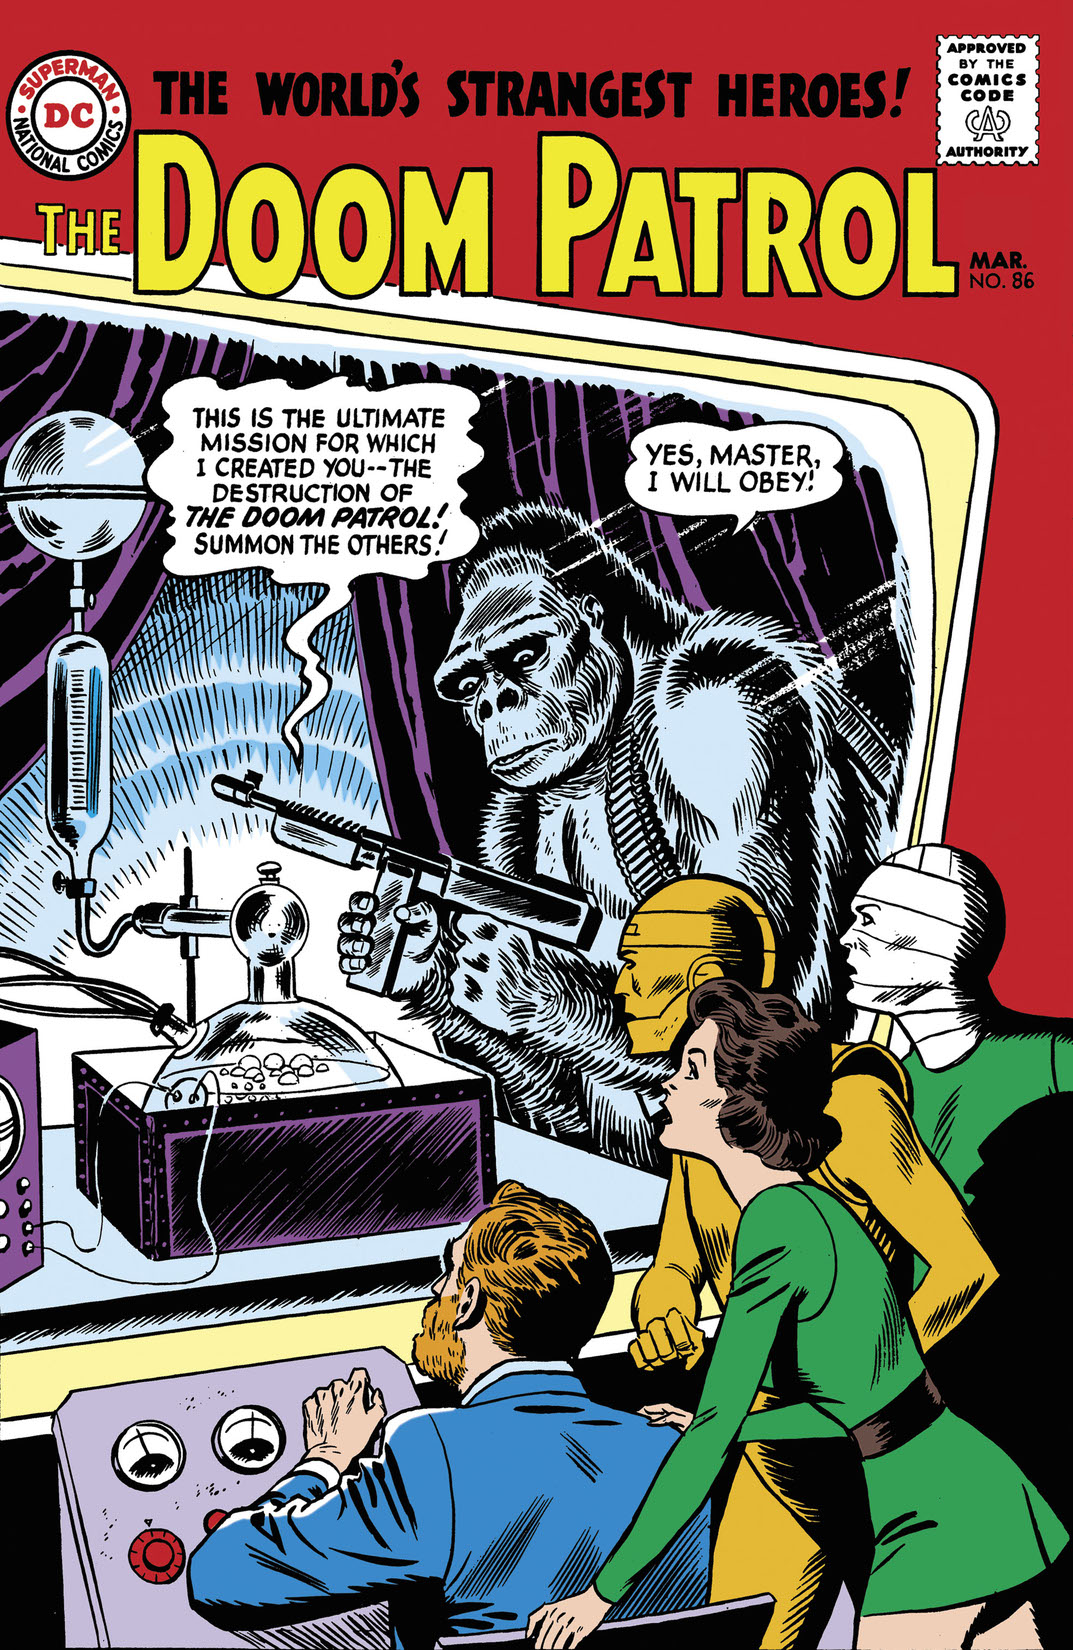 Doom Patrol (1964-) #86 preview images